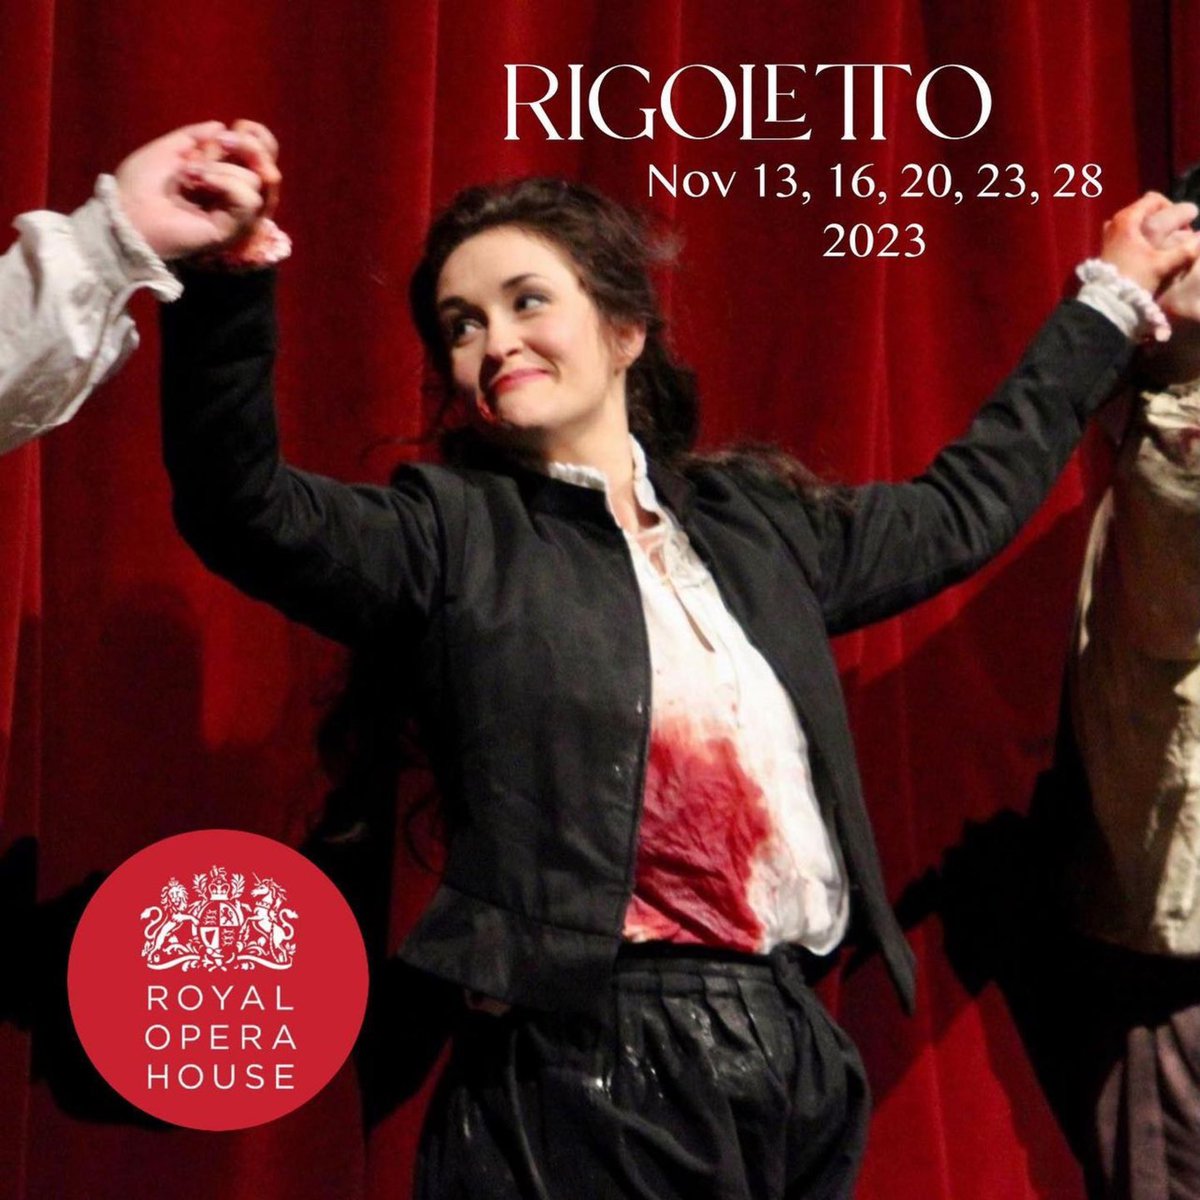 Next 👉 Royal Opera House DEBUT!!!!! @RoyalOperaHouse #CoventGarden 

roh.org.uk/tickets-and-ev…

#GiuseppeVerdi #Rigoletto #Gilda #HouseDebut #RoyalOperaHouse #Debut #London #VivaVerdi